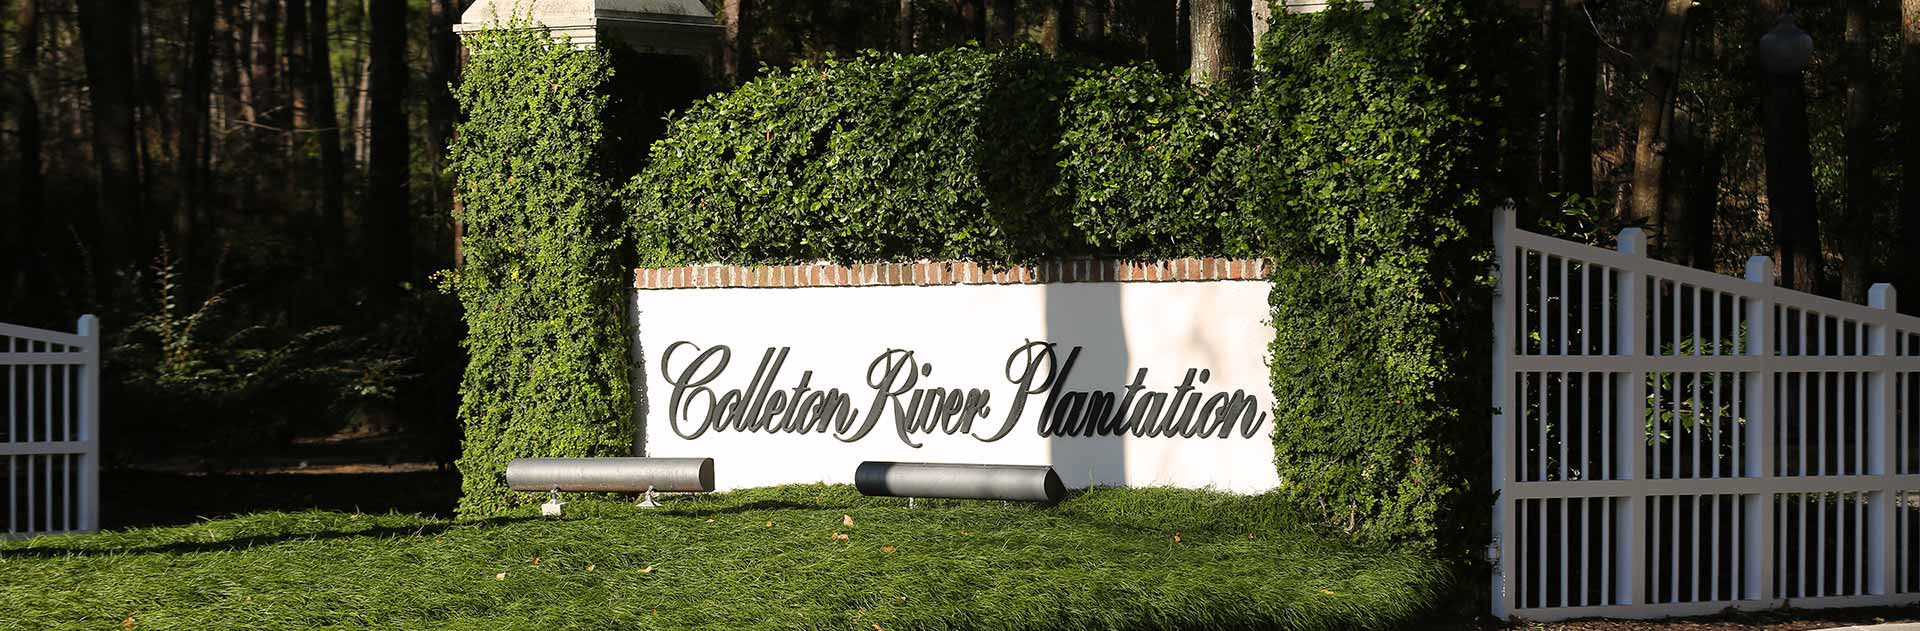 Colleton River Plantation Community Sign